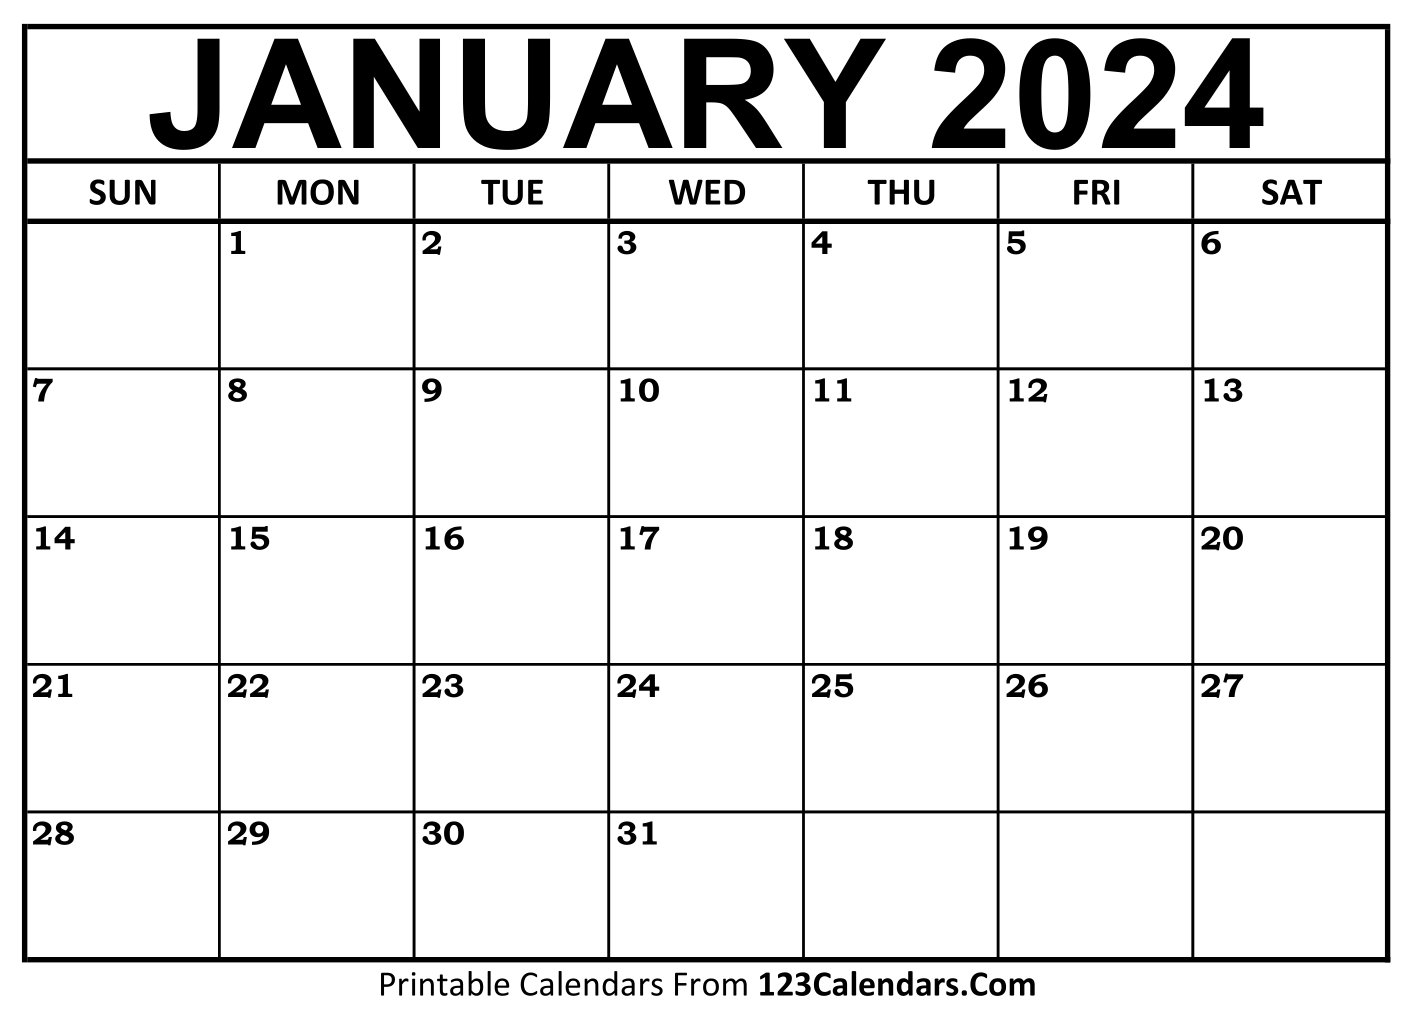 Printable January 2024 Calendar Templates - 123Calendars for Jan 2024 Printable Calendar Free